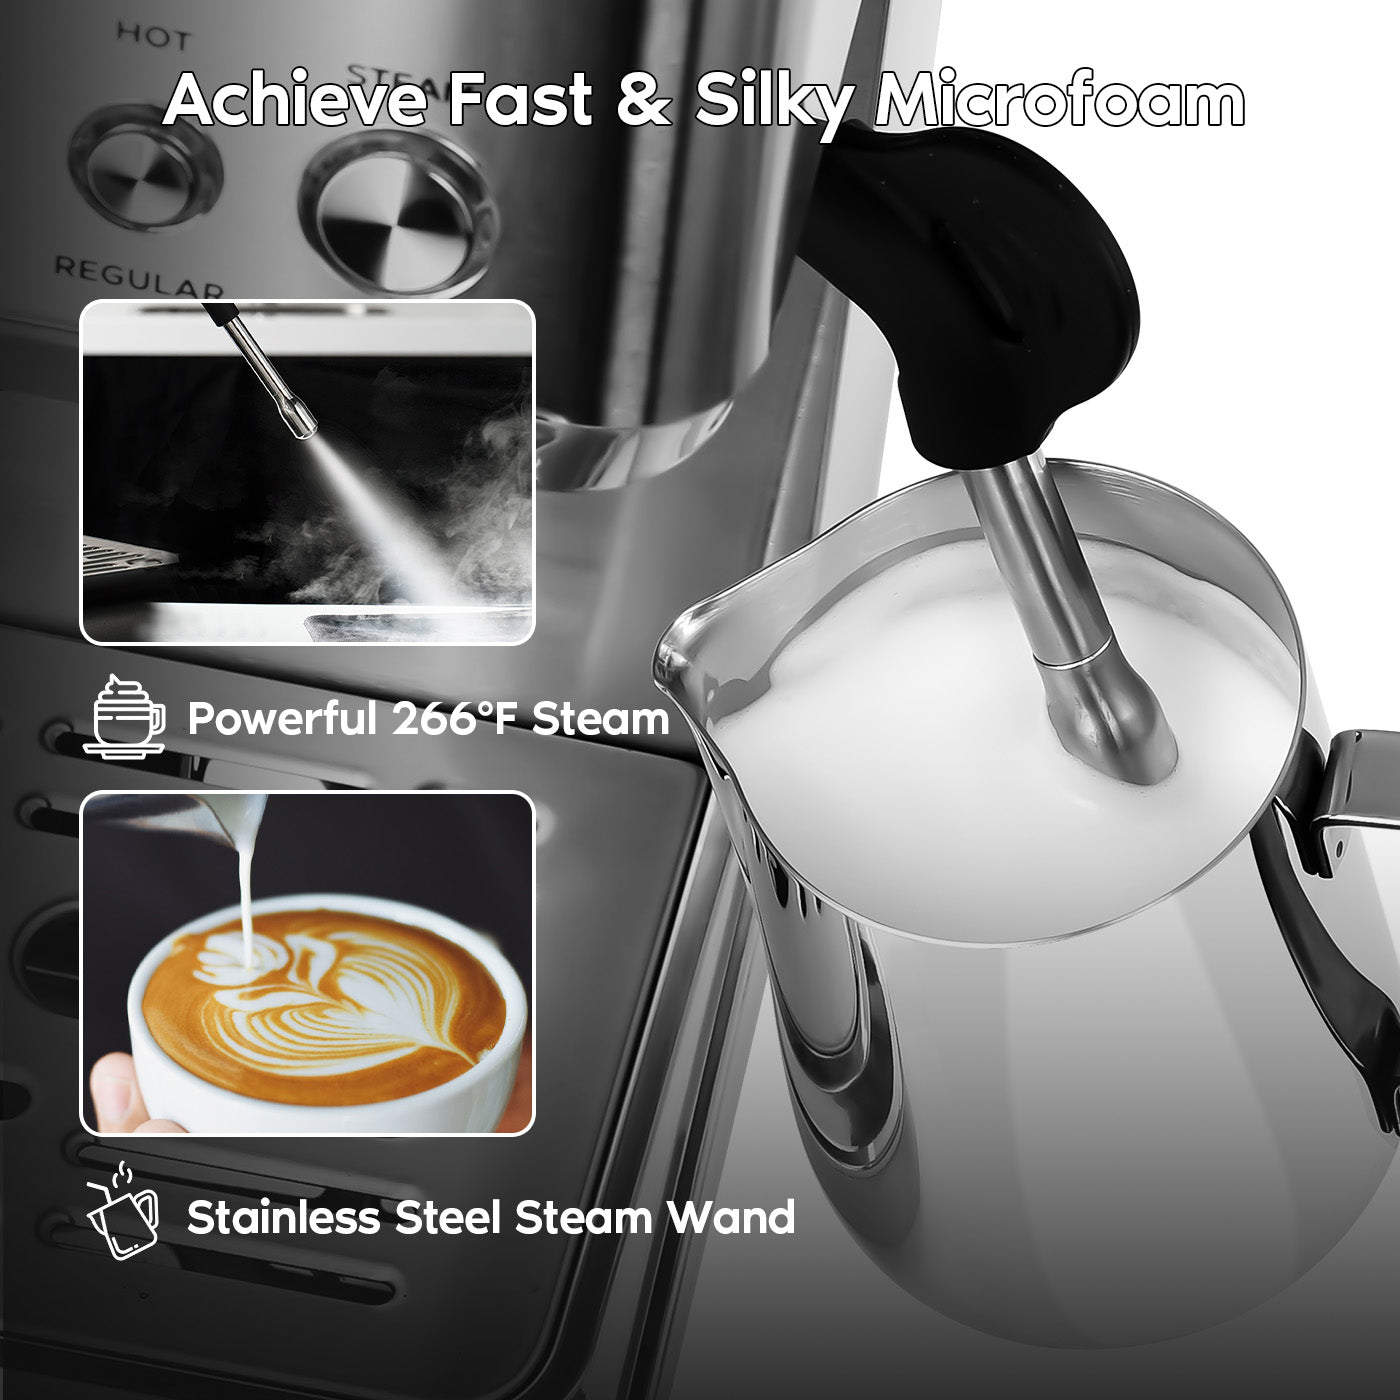 CASABREWS 3700-Gense 20 Cup Sliver Stainless Steel Espresso